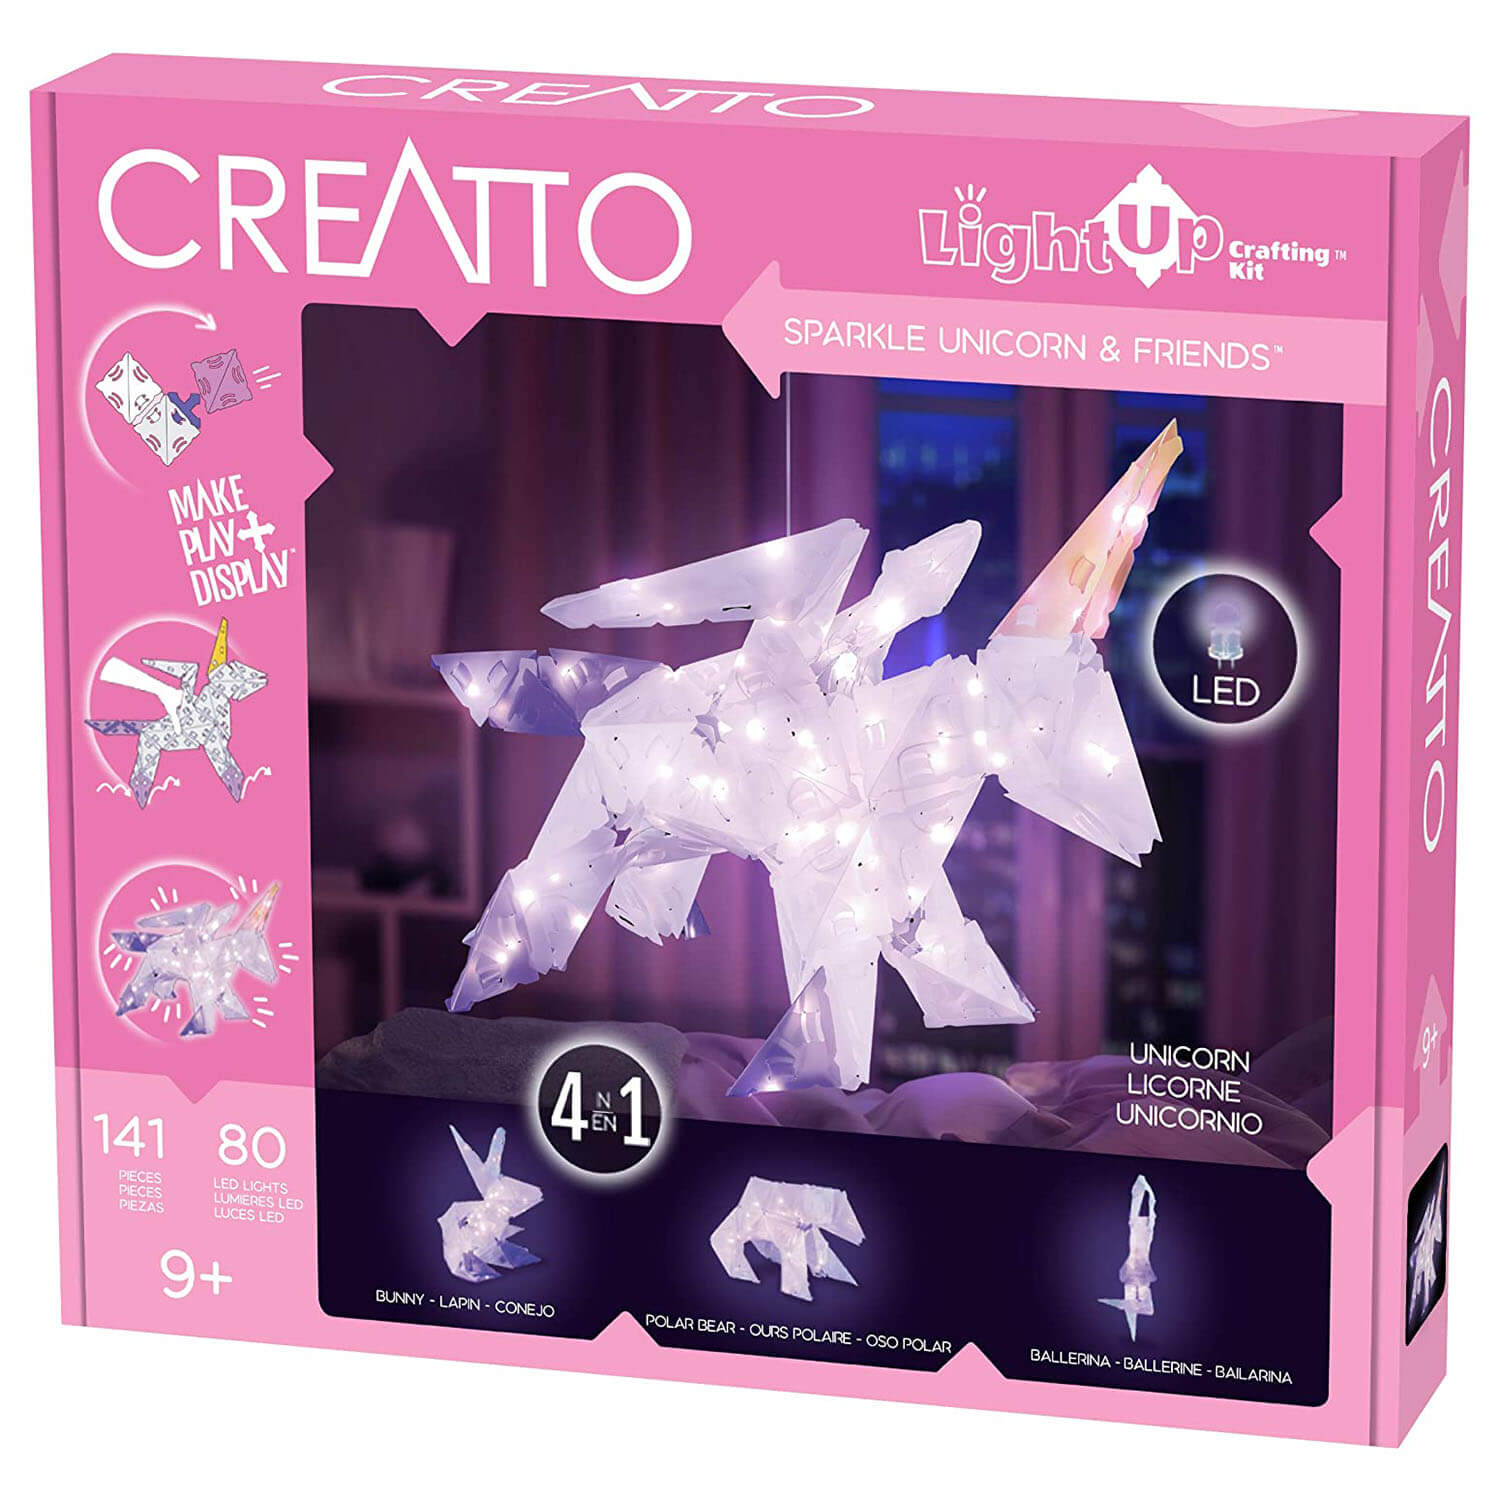 Thames and Kosmos Creatto: Sparkle Unicorn & Friends Light-up Kit